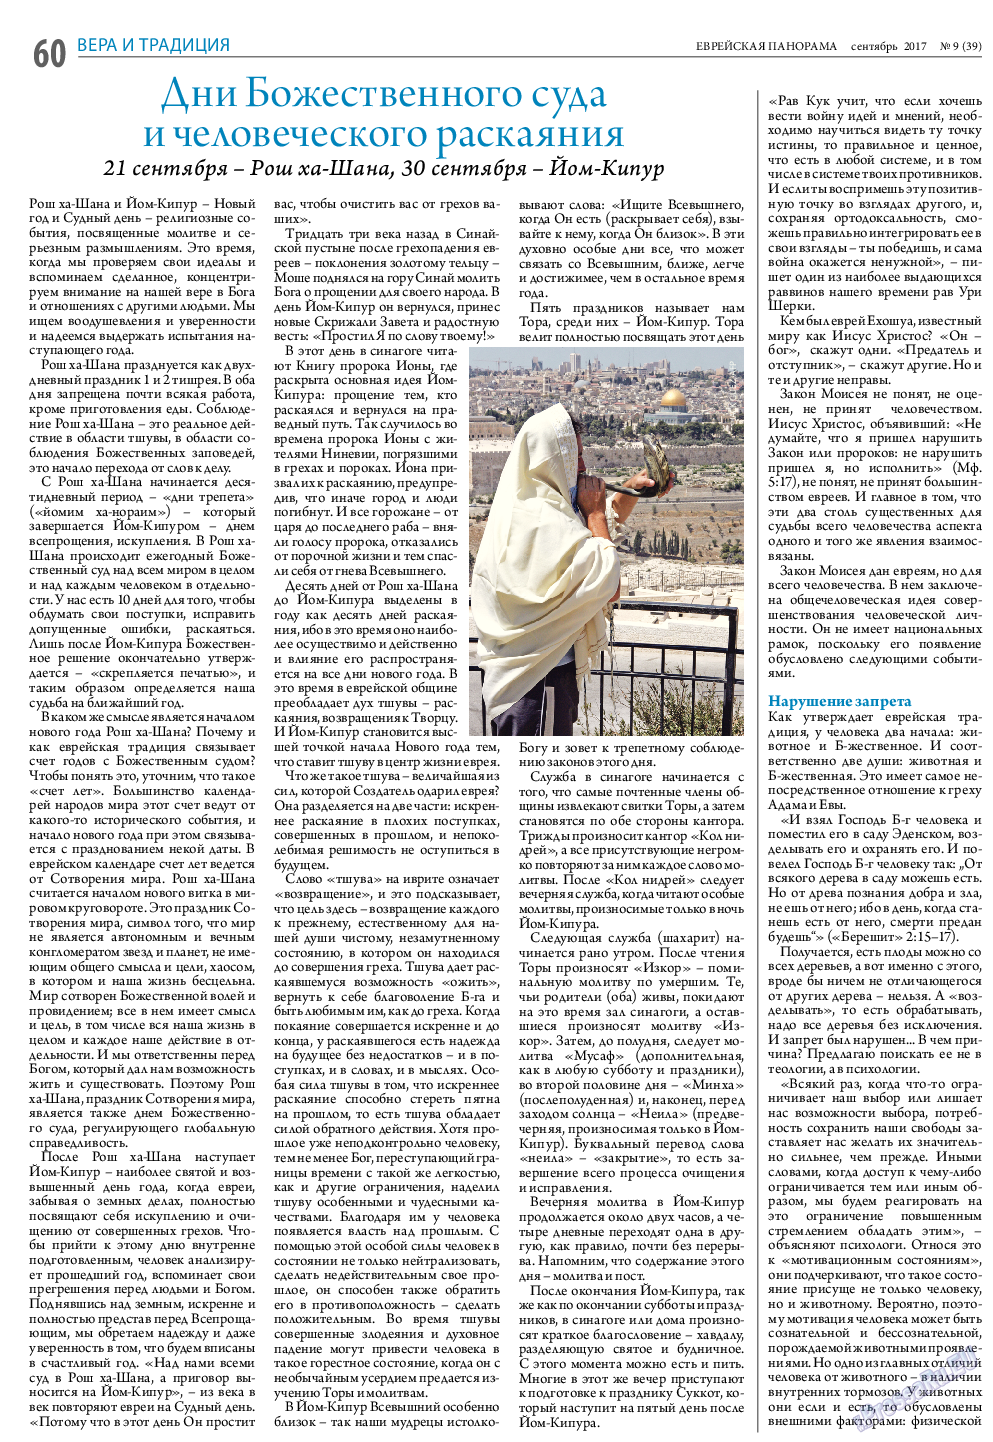 Еврейская панорама, газета. 2017 №9 стр.60